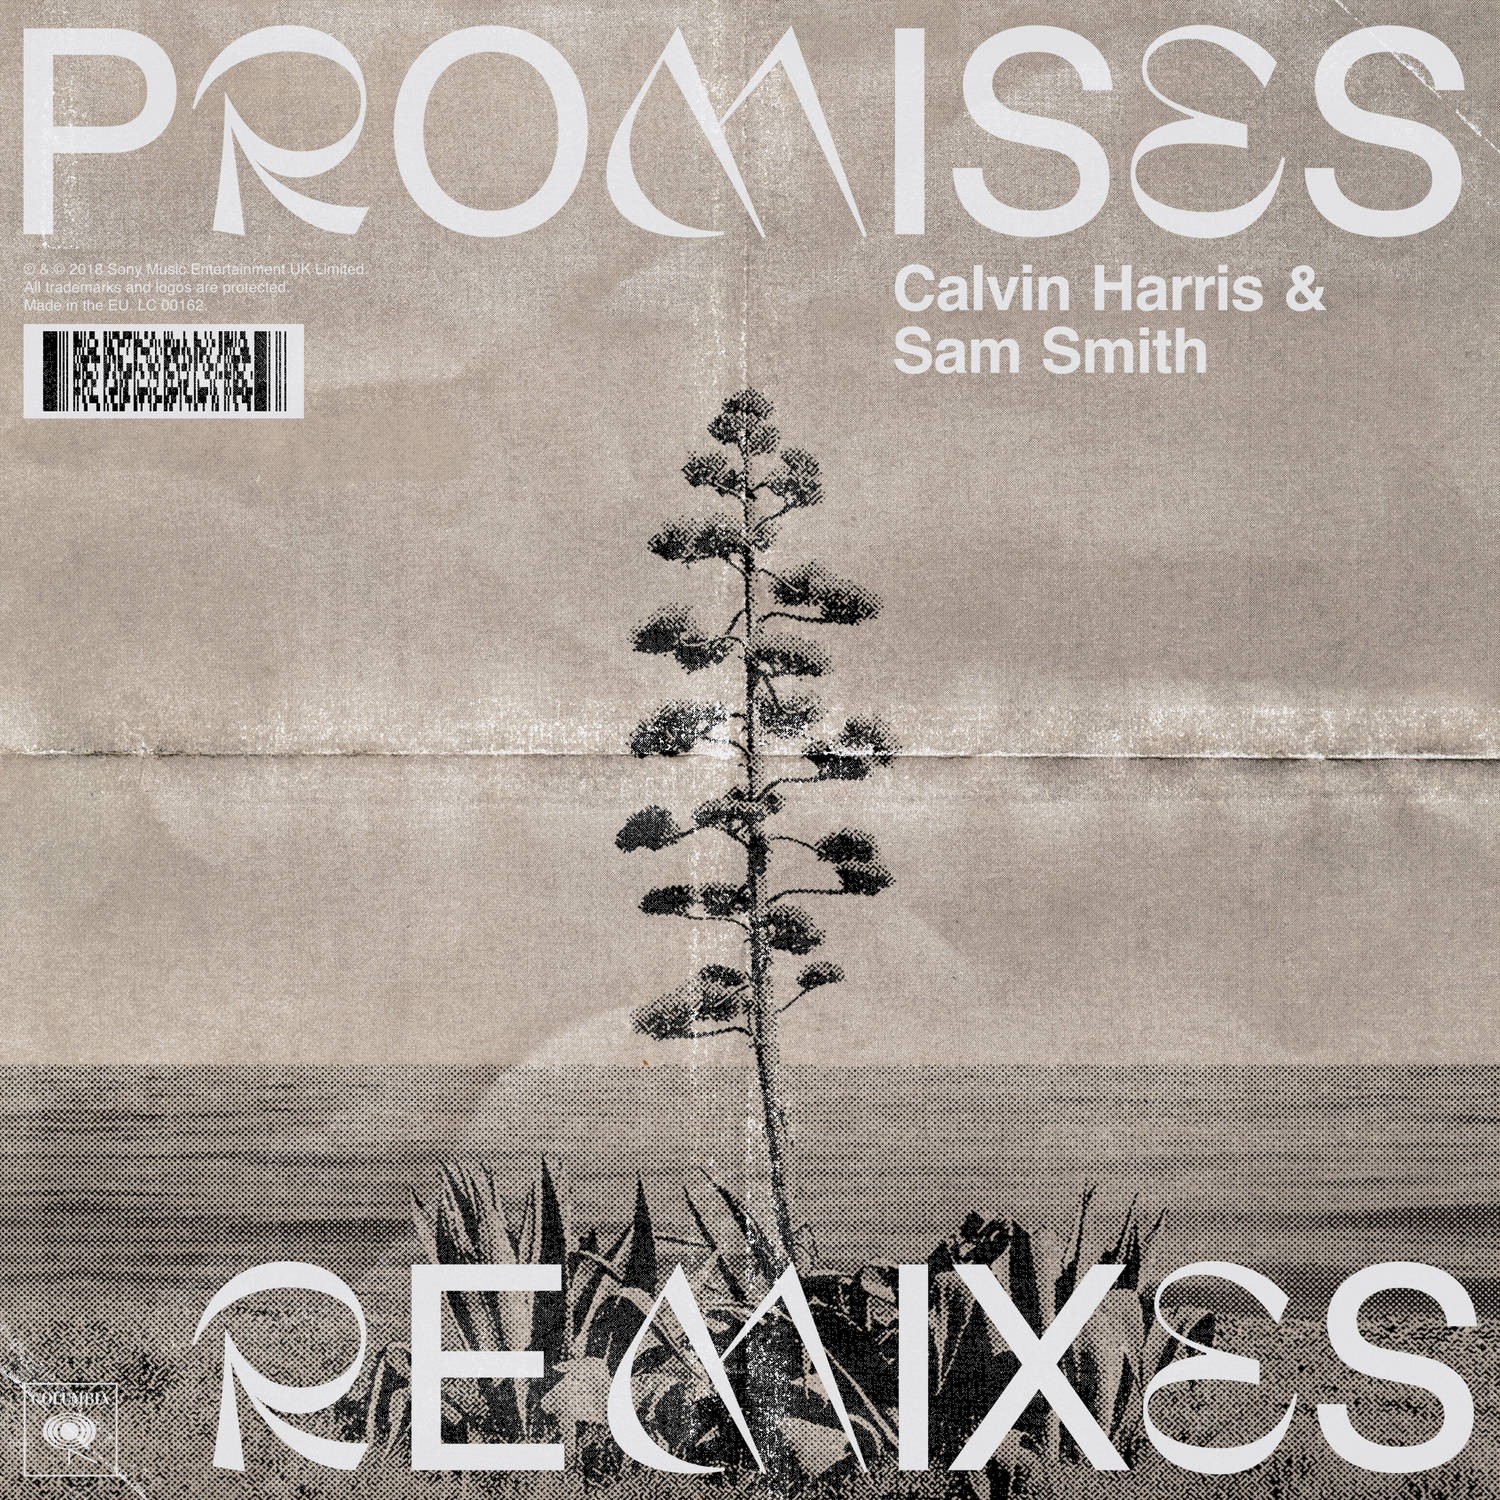 Promises (Sonny Fodera Extended Remix)